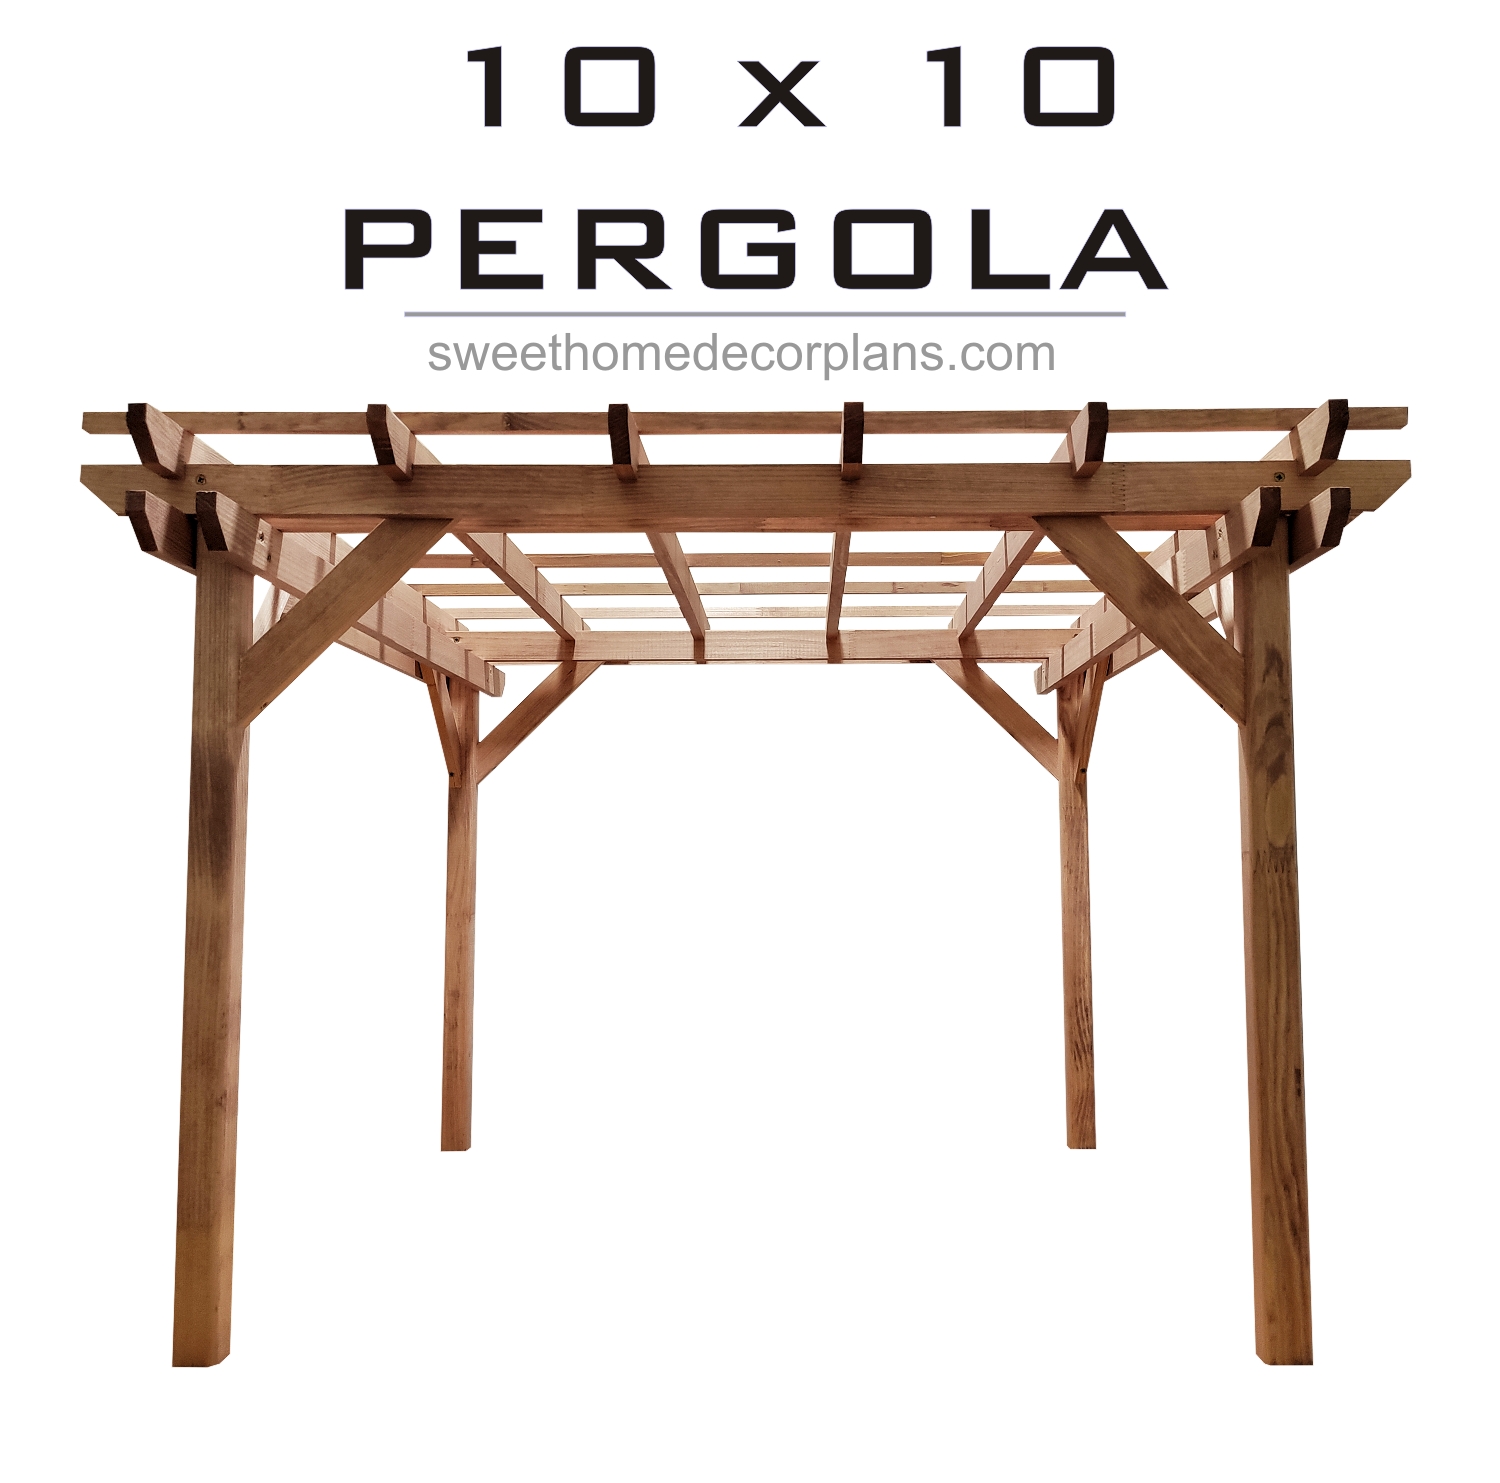 Diy-wooden-10-x-10-pergola-plans-for-outdoor